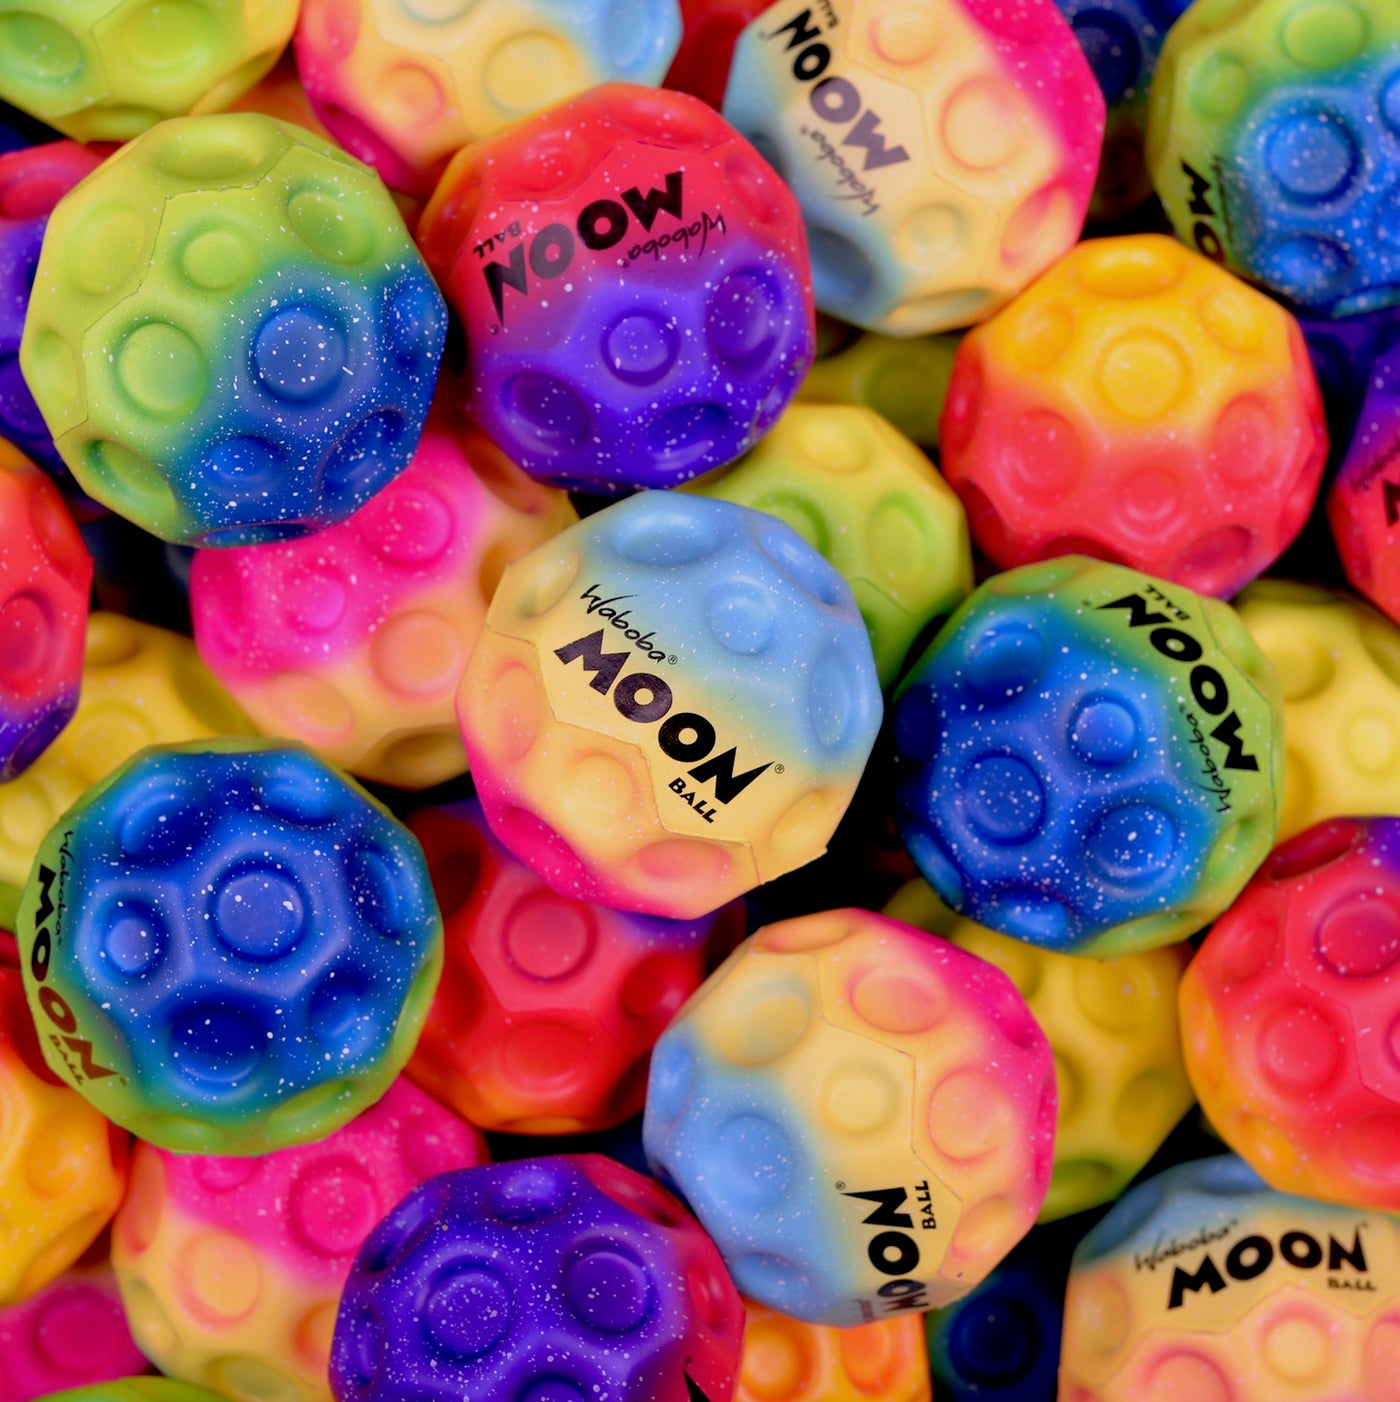 Rainbow Moon Balls